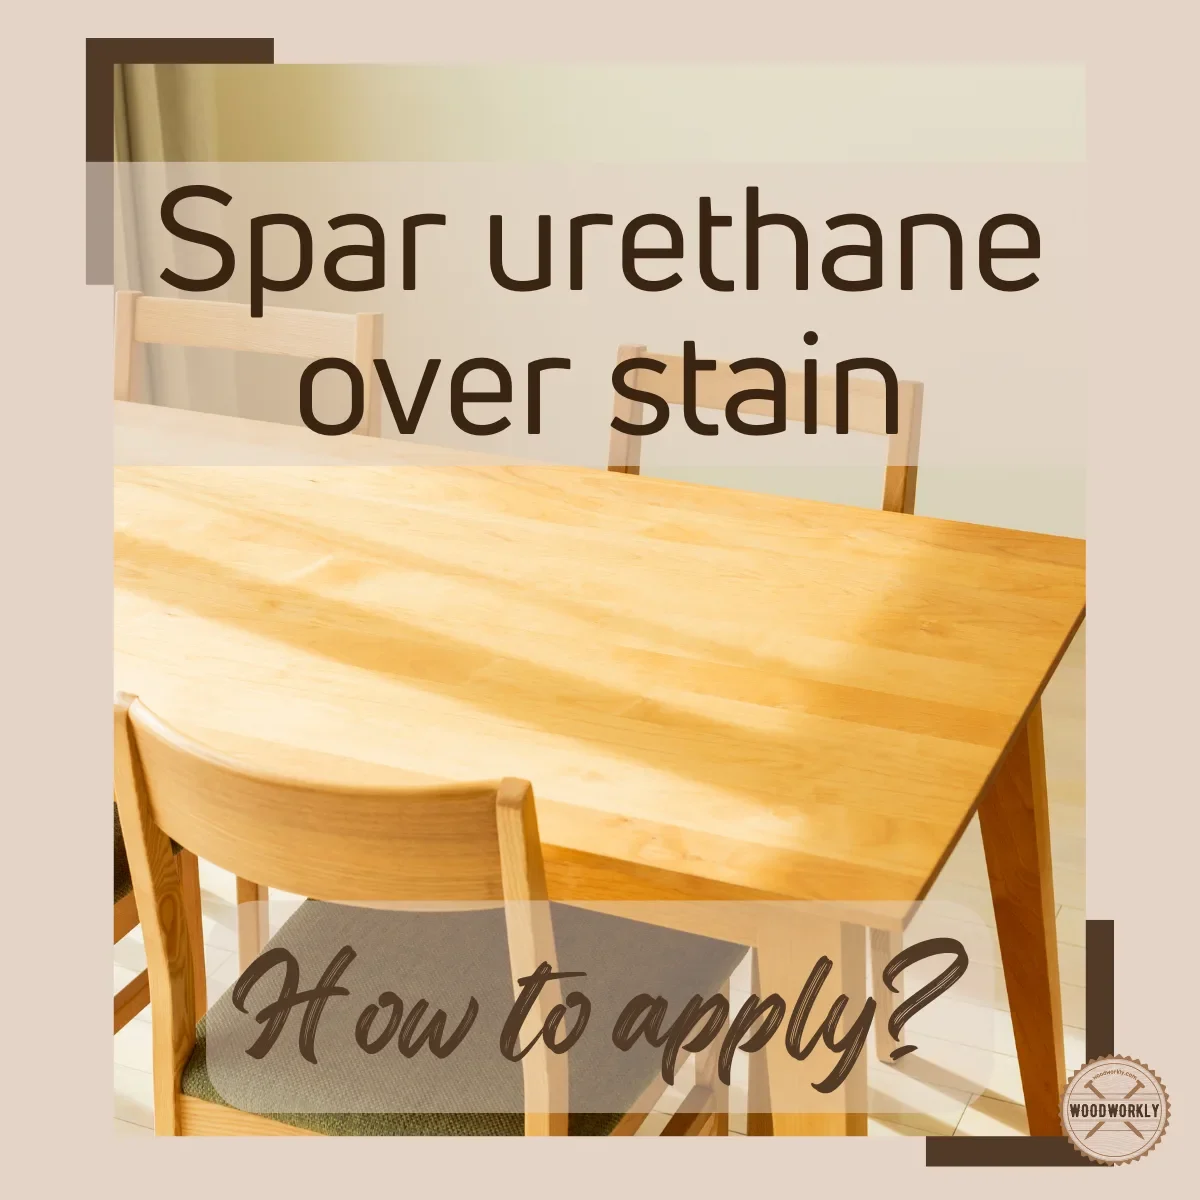 spar urethane over stain